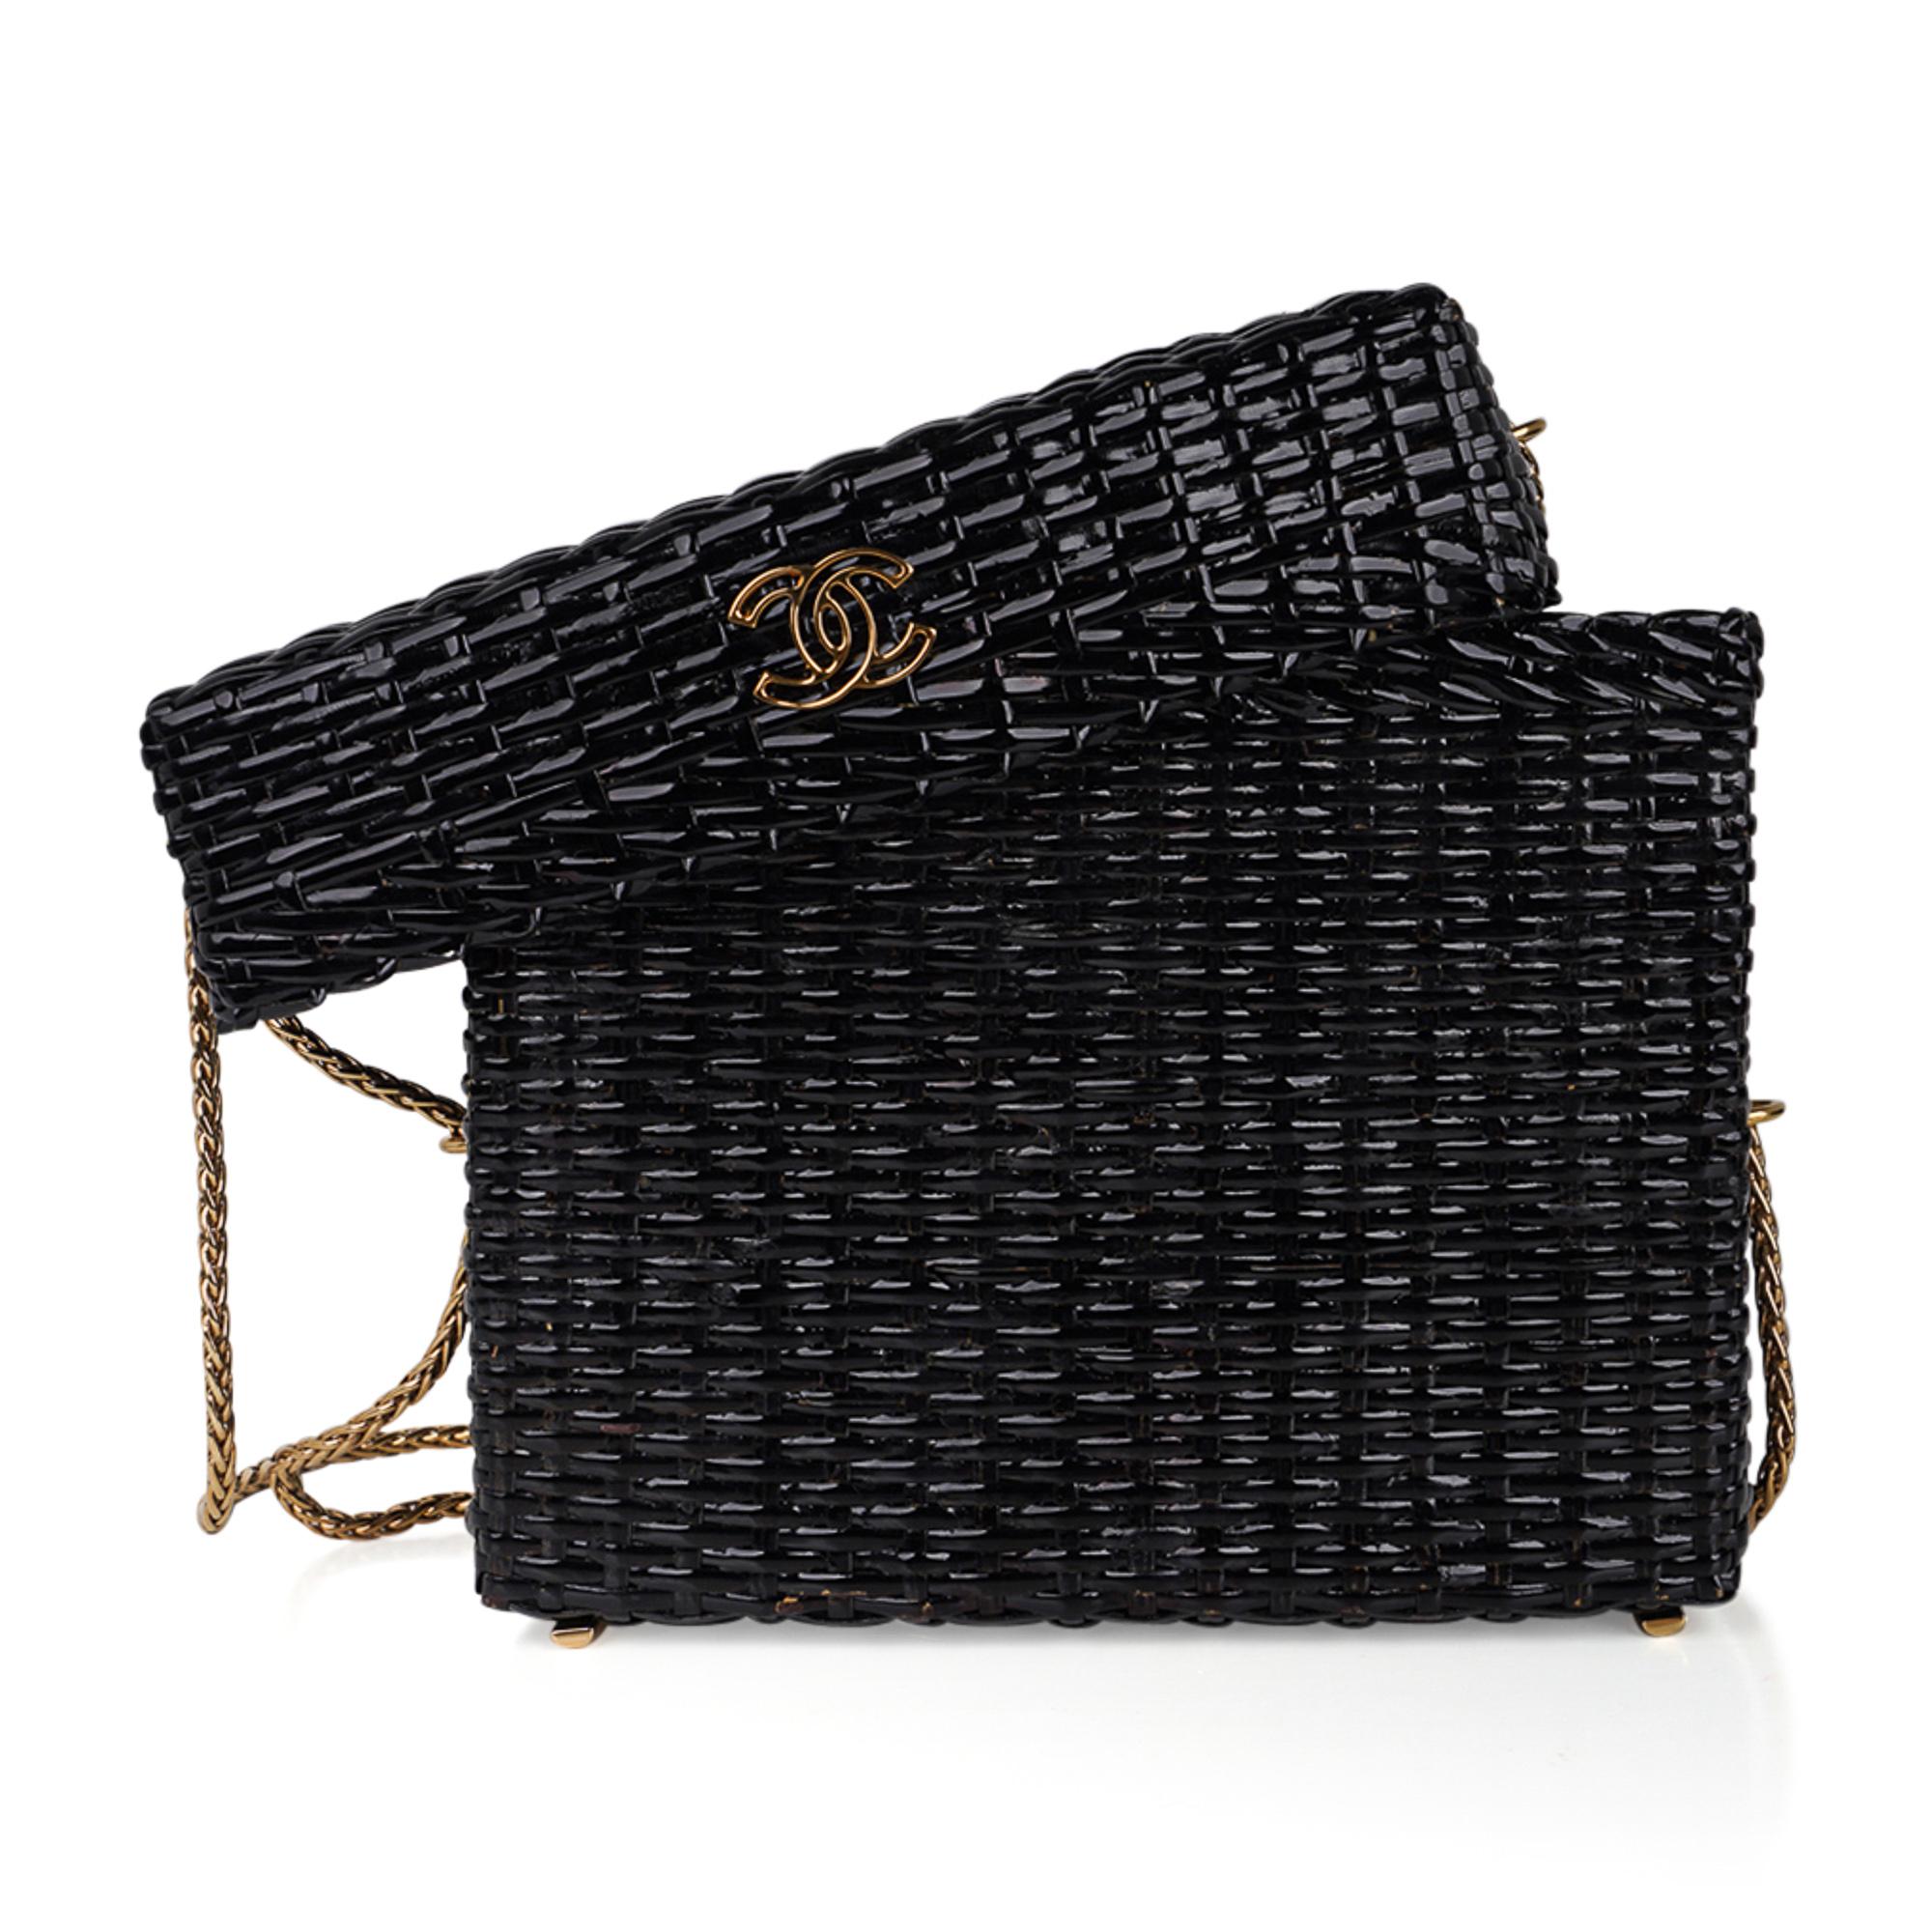 Chanel Bag Black Vintage Wicker Picnic Lunch Basket Gold Chain Strap 3